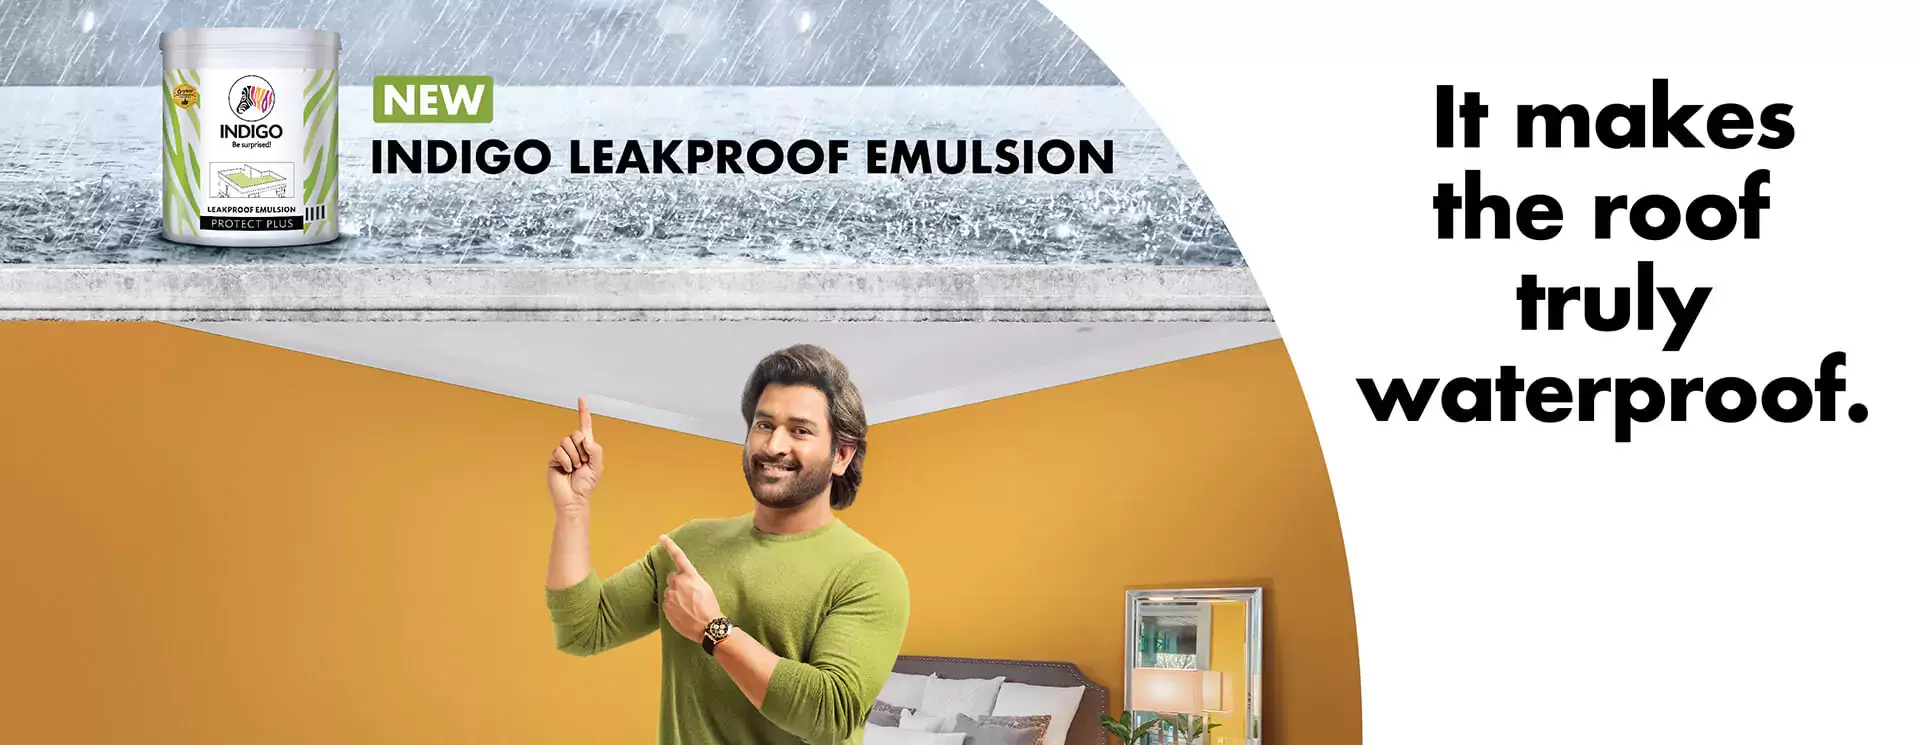 Indigo leakproof emulsion for Waterproofing